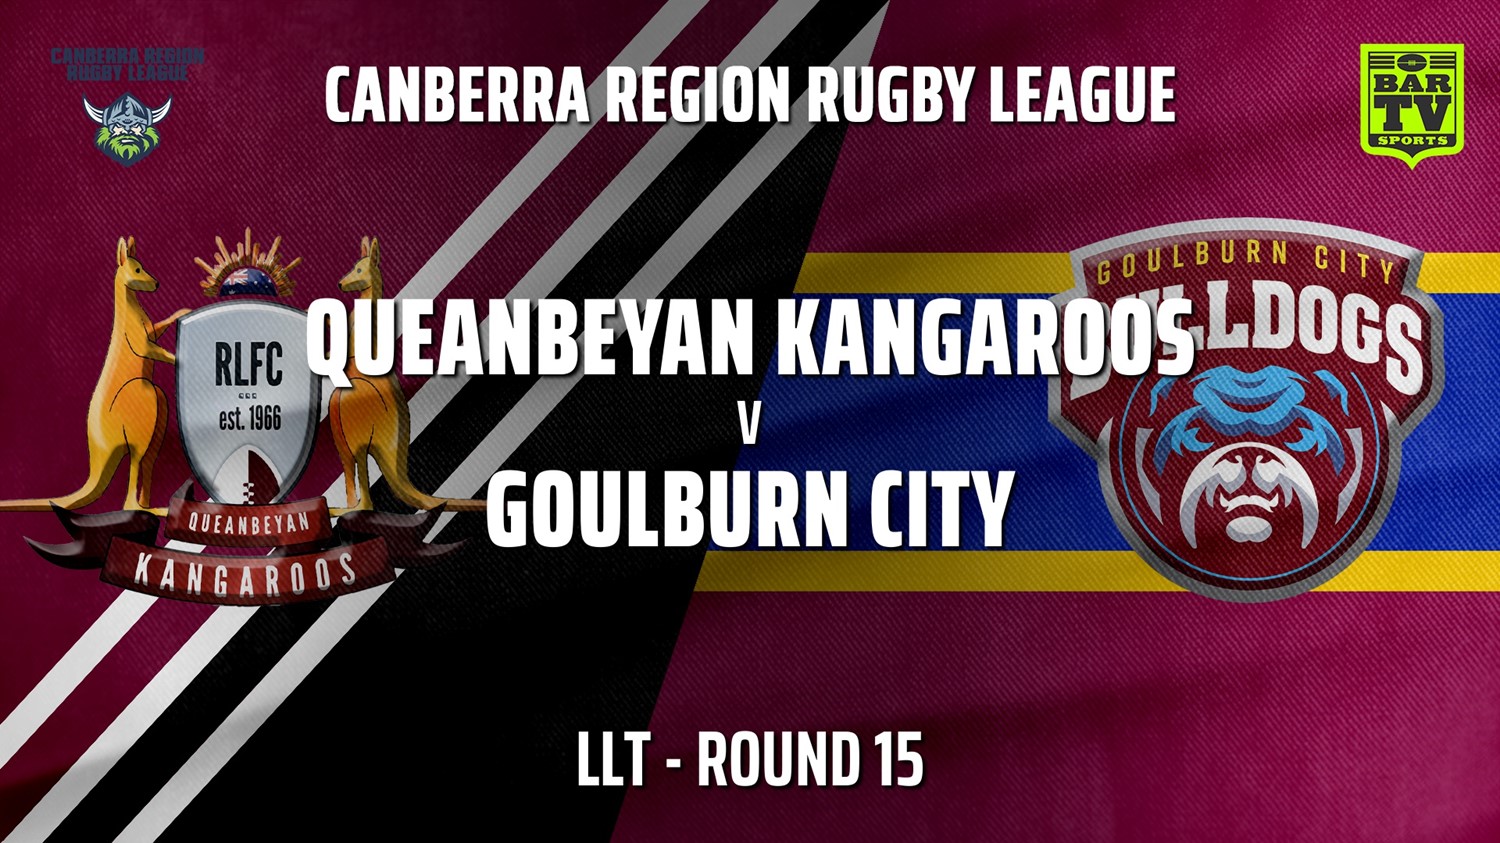 210807-Canberra Round 15 - LLT - Queanbeyan Kangaroos v Goulburn City Bulldogs Slate Image